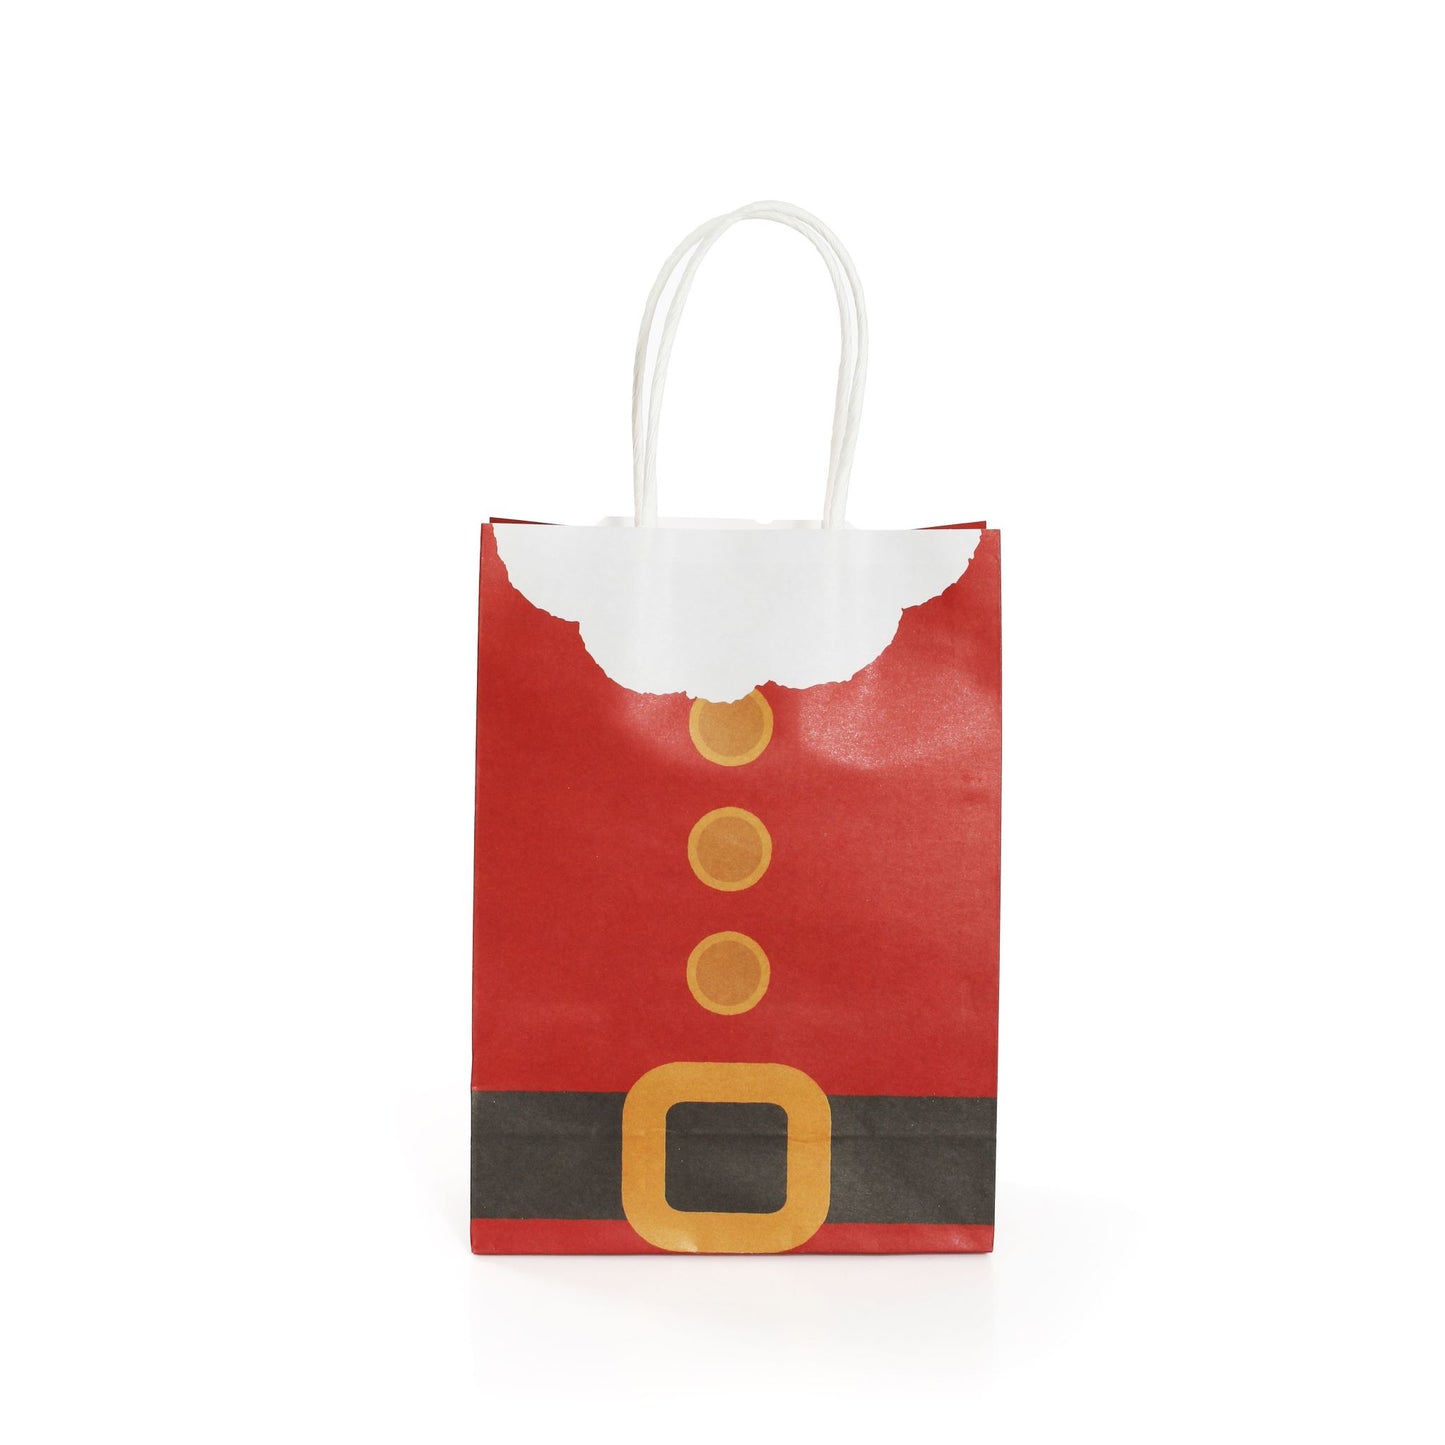 Santa Suit Design Paper Bag with Handles